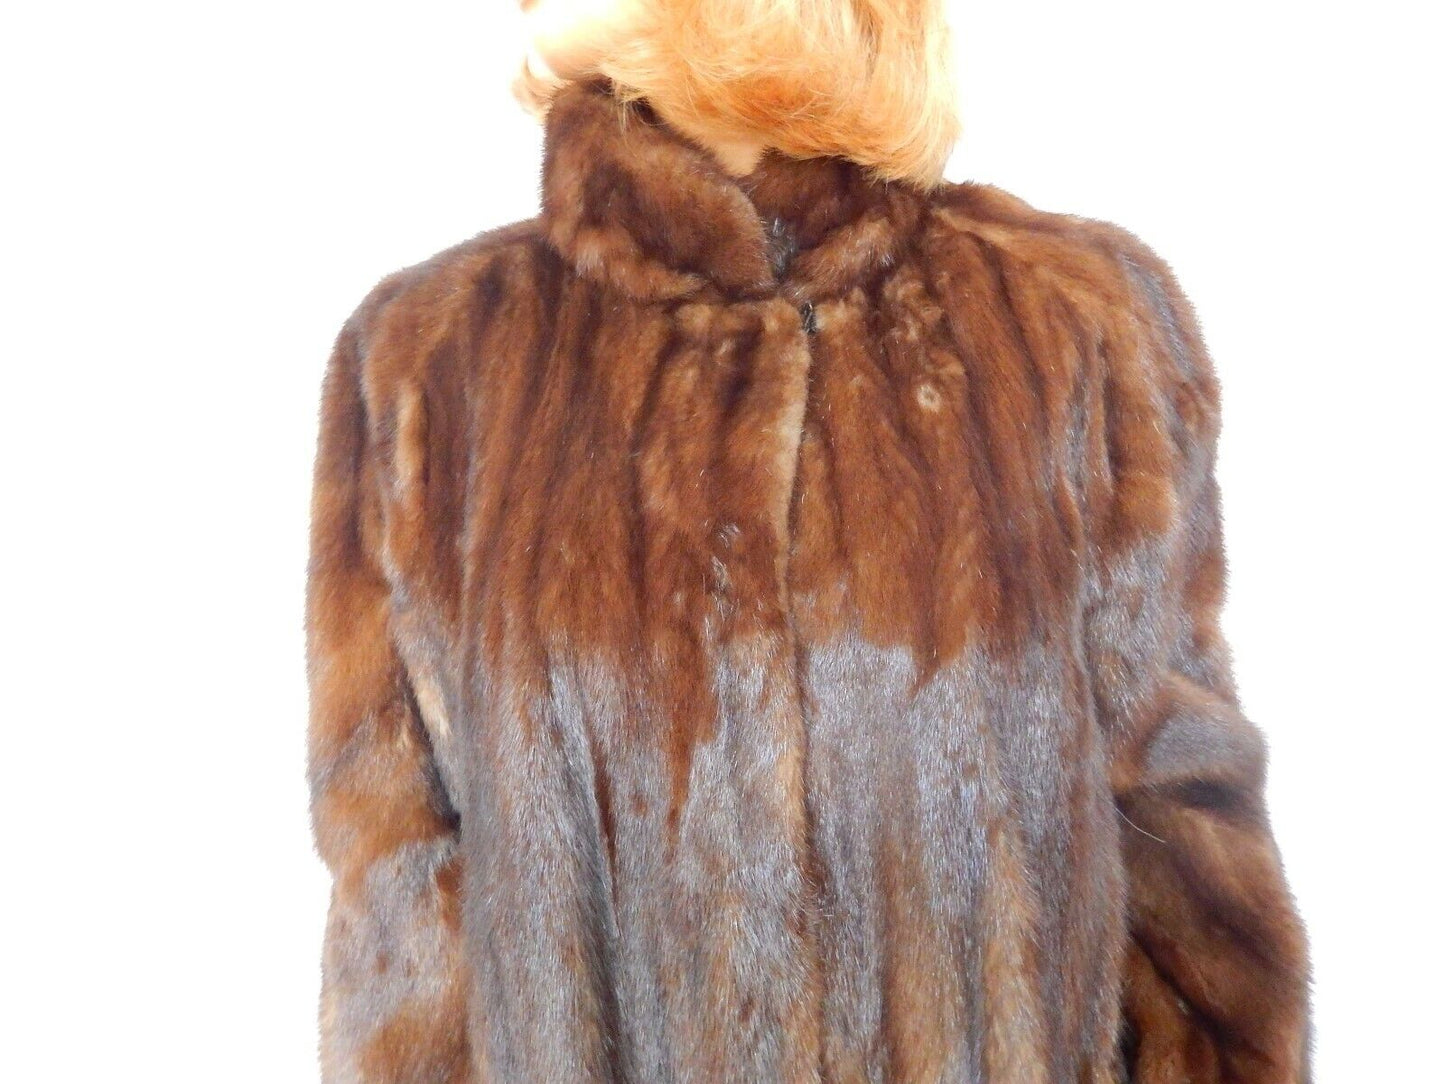 VINTAGE Womens Long Sleeve Mink Fur Coat Brown Full Length Size 13-14